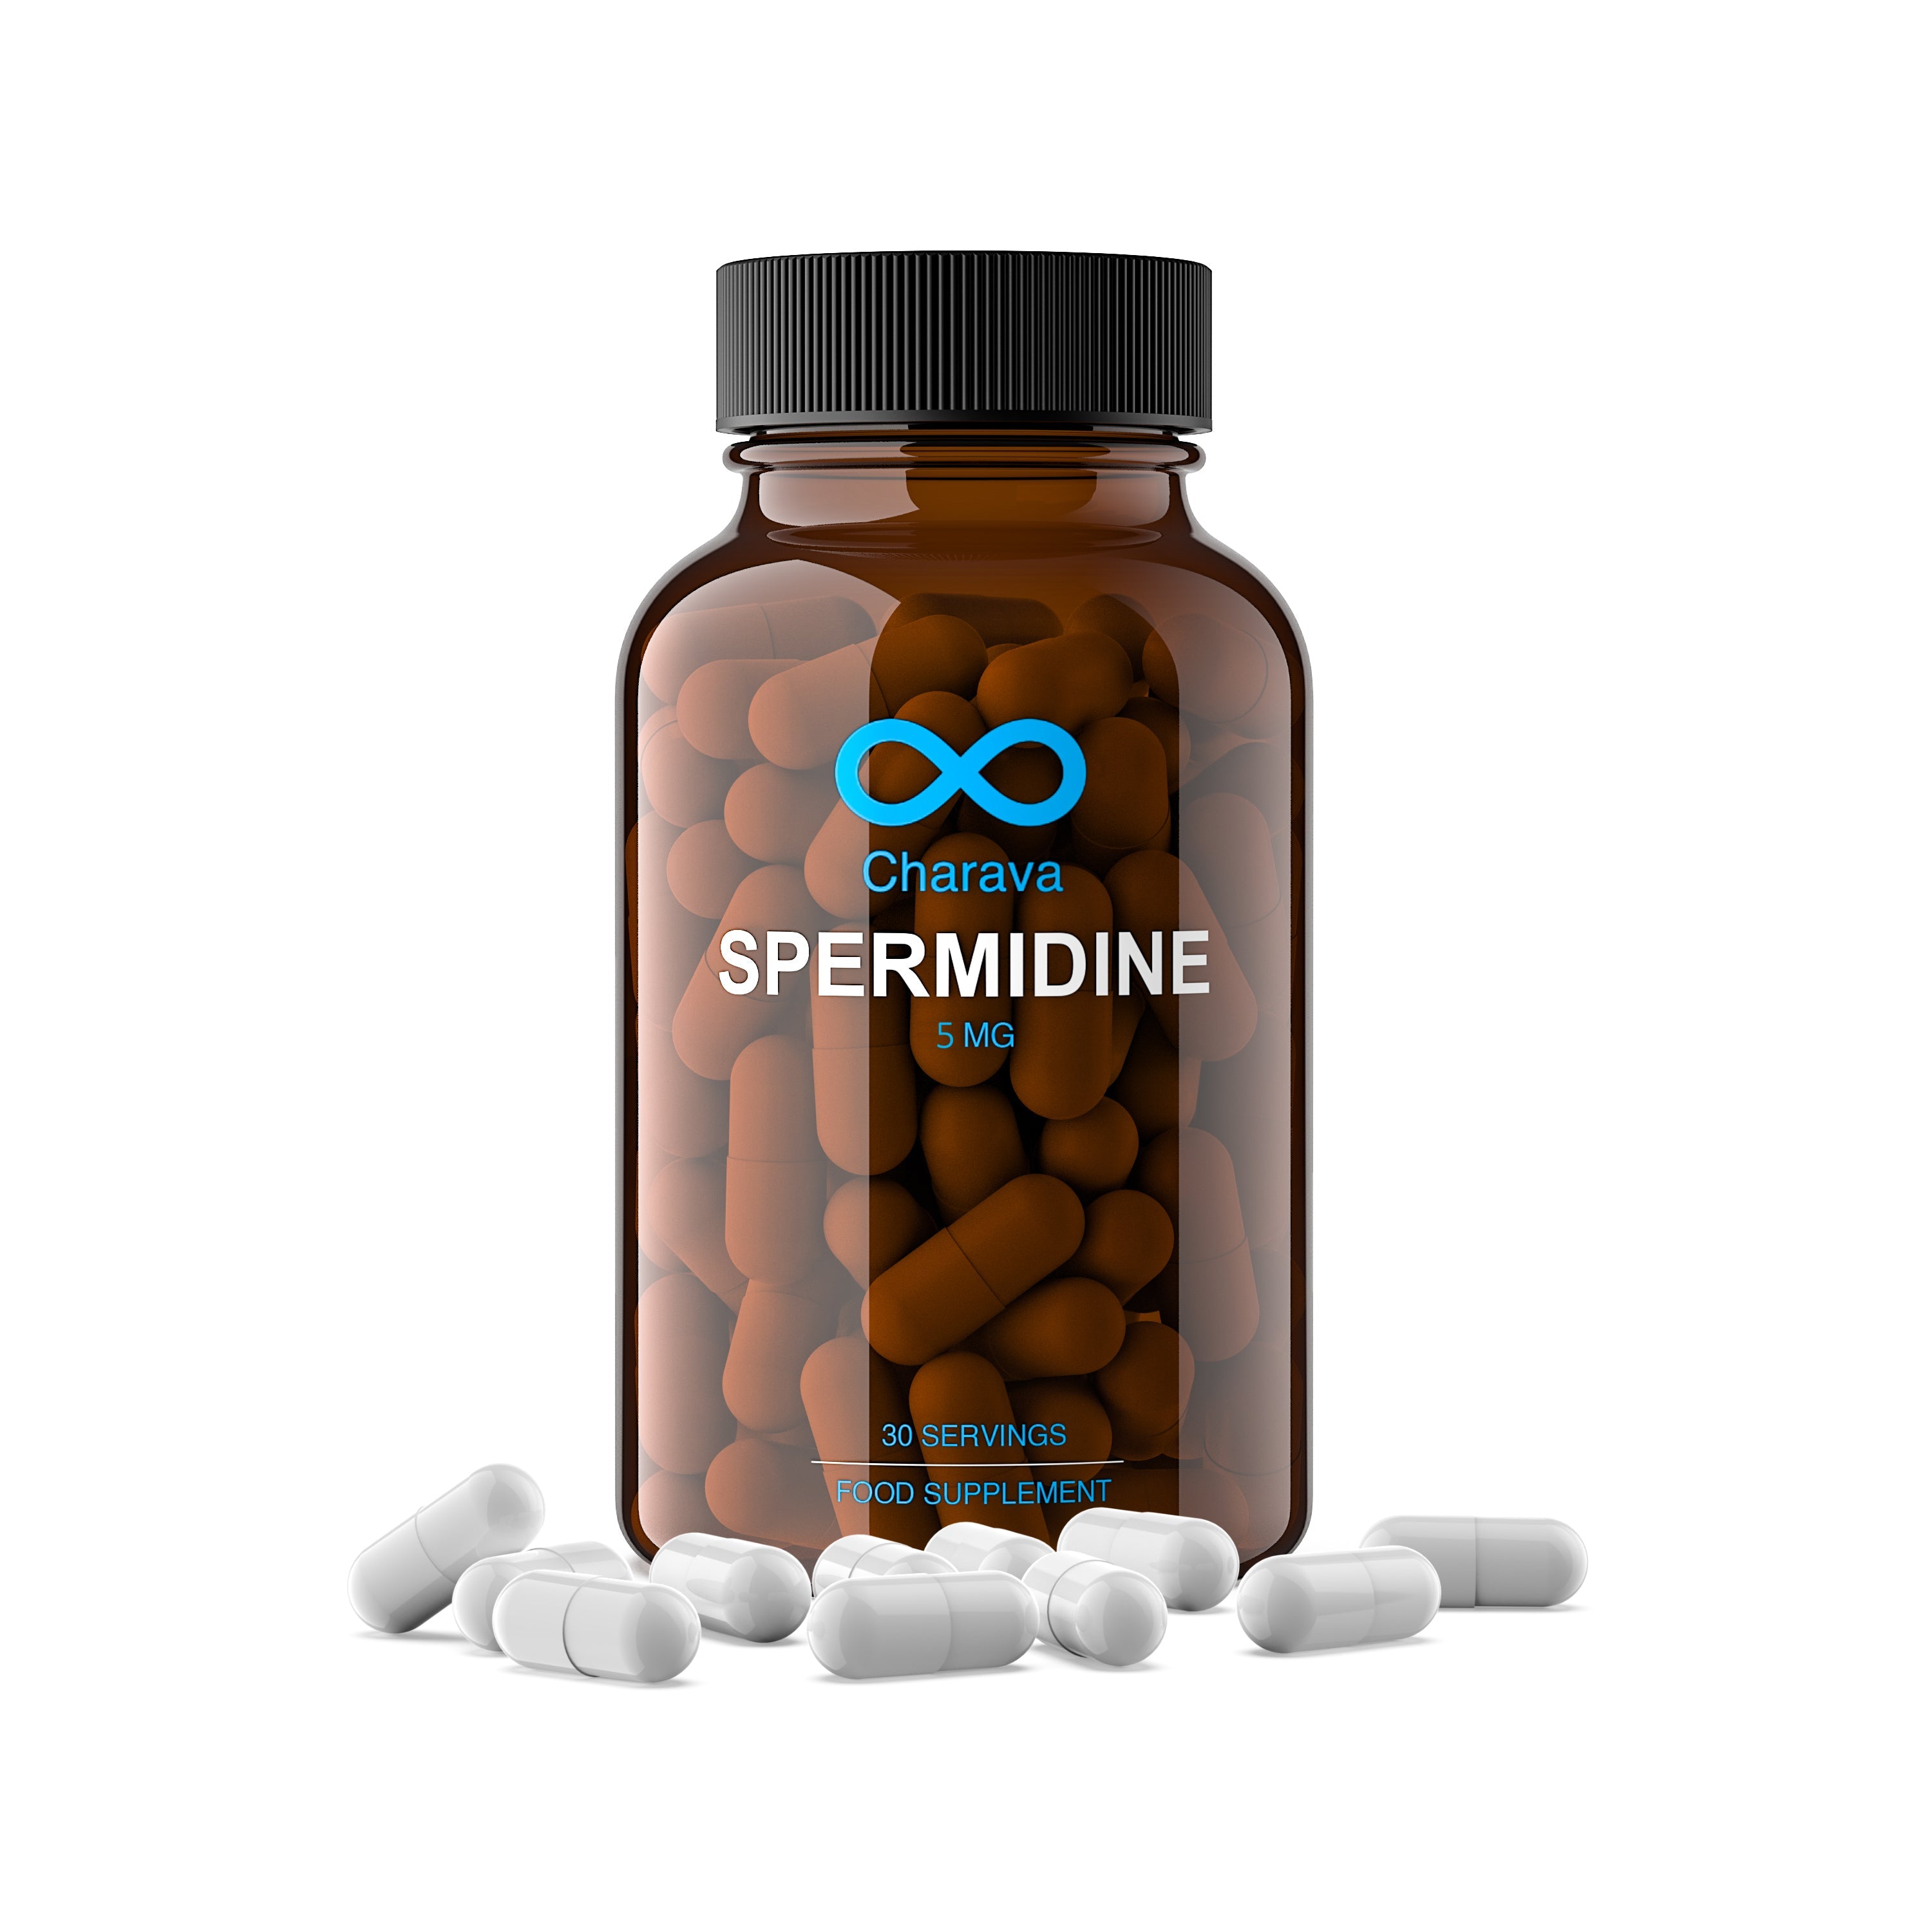 Spermidine - 5mg - Charava MENA